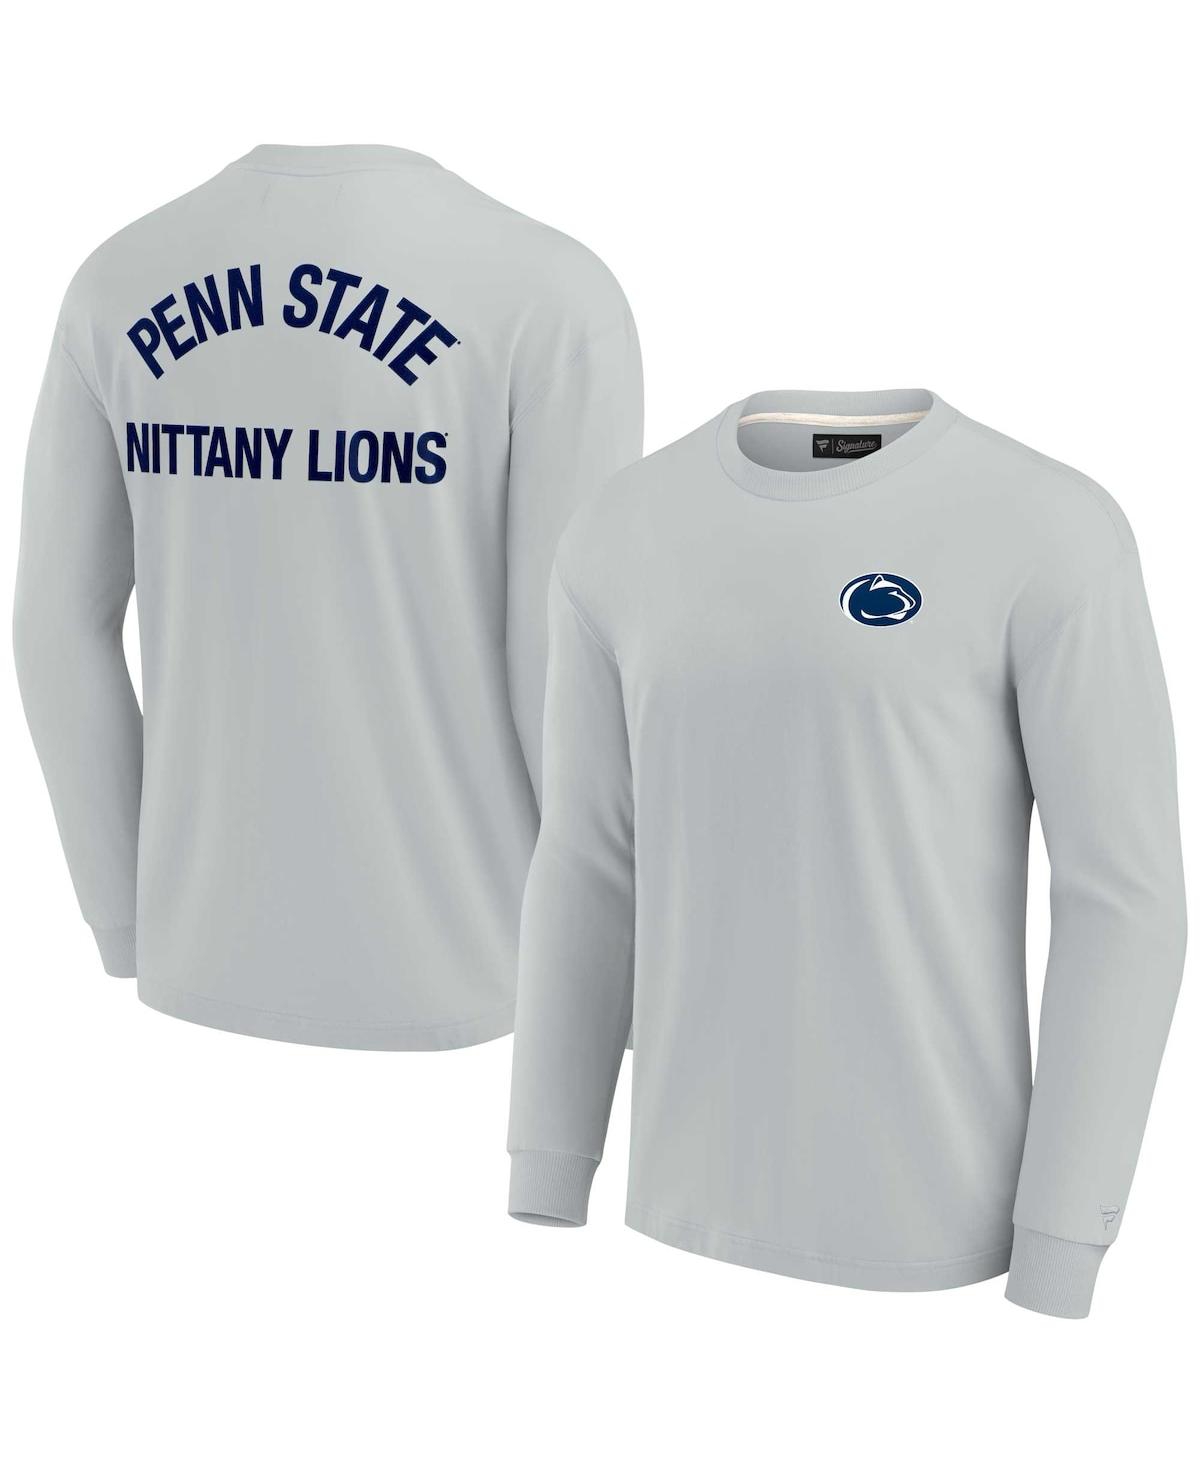 Fanatics Signature Men's And Women's  Gray Penn State Nittany Lions Super Soft Long Sleeve T-shirt